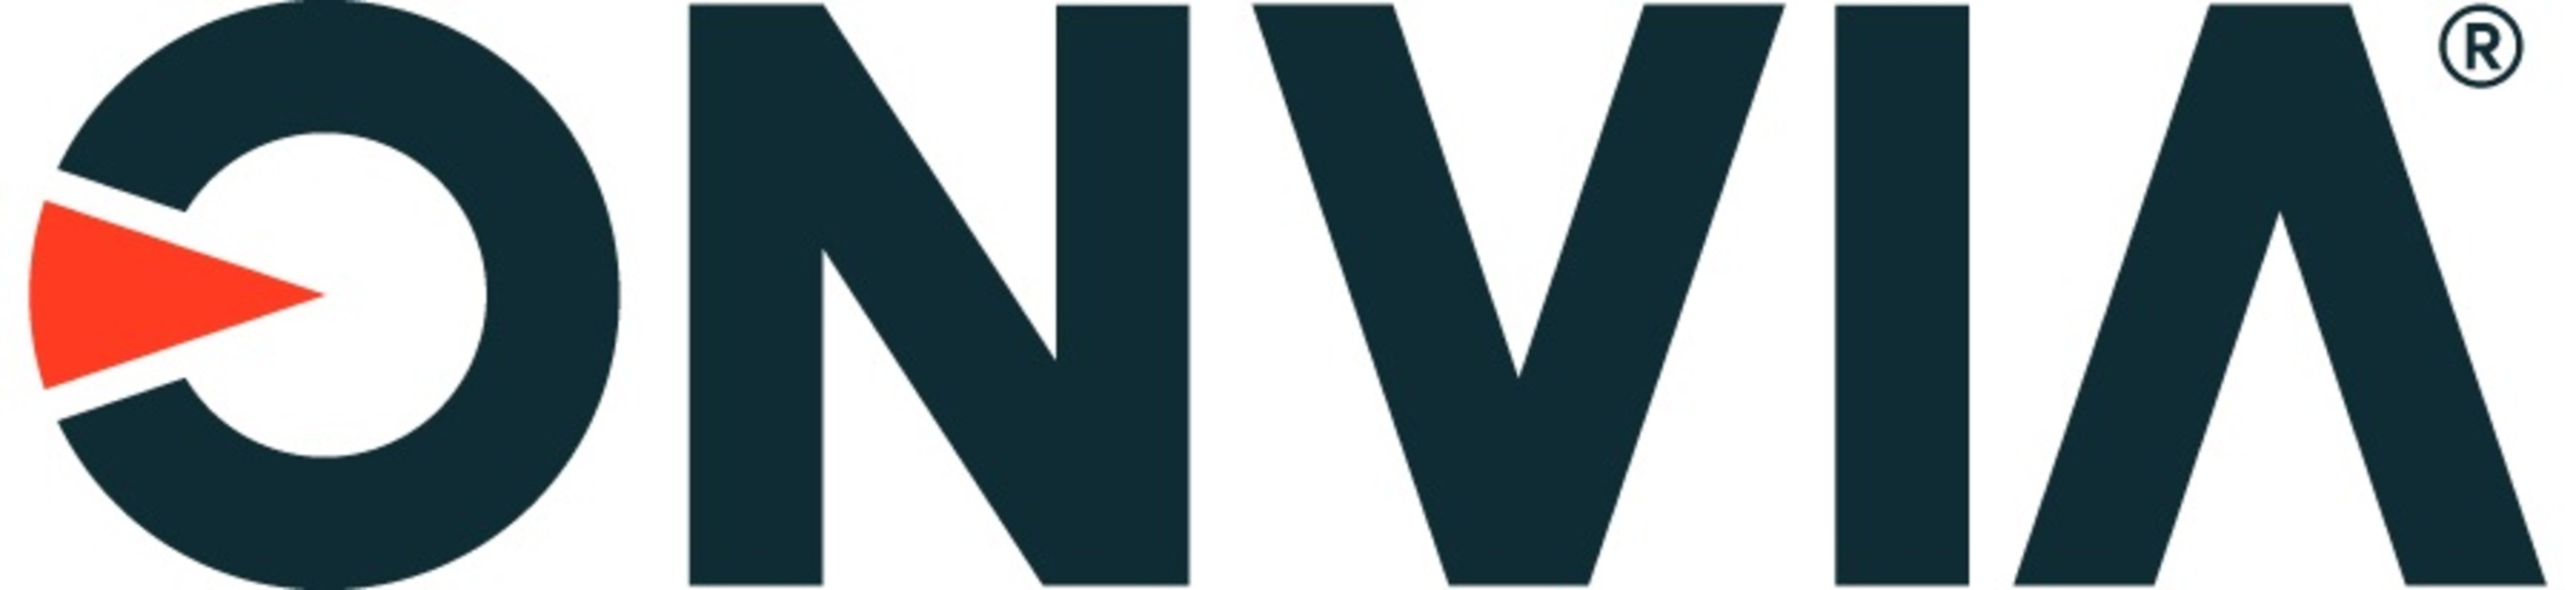 Onvia, Inc. Logo. (PRNewsFoto/Onvia, Inc.) (PRNewsFoto/)